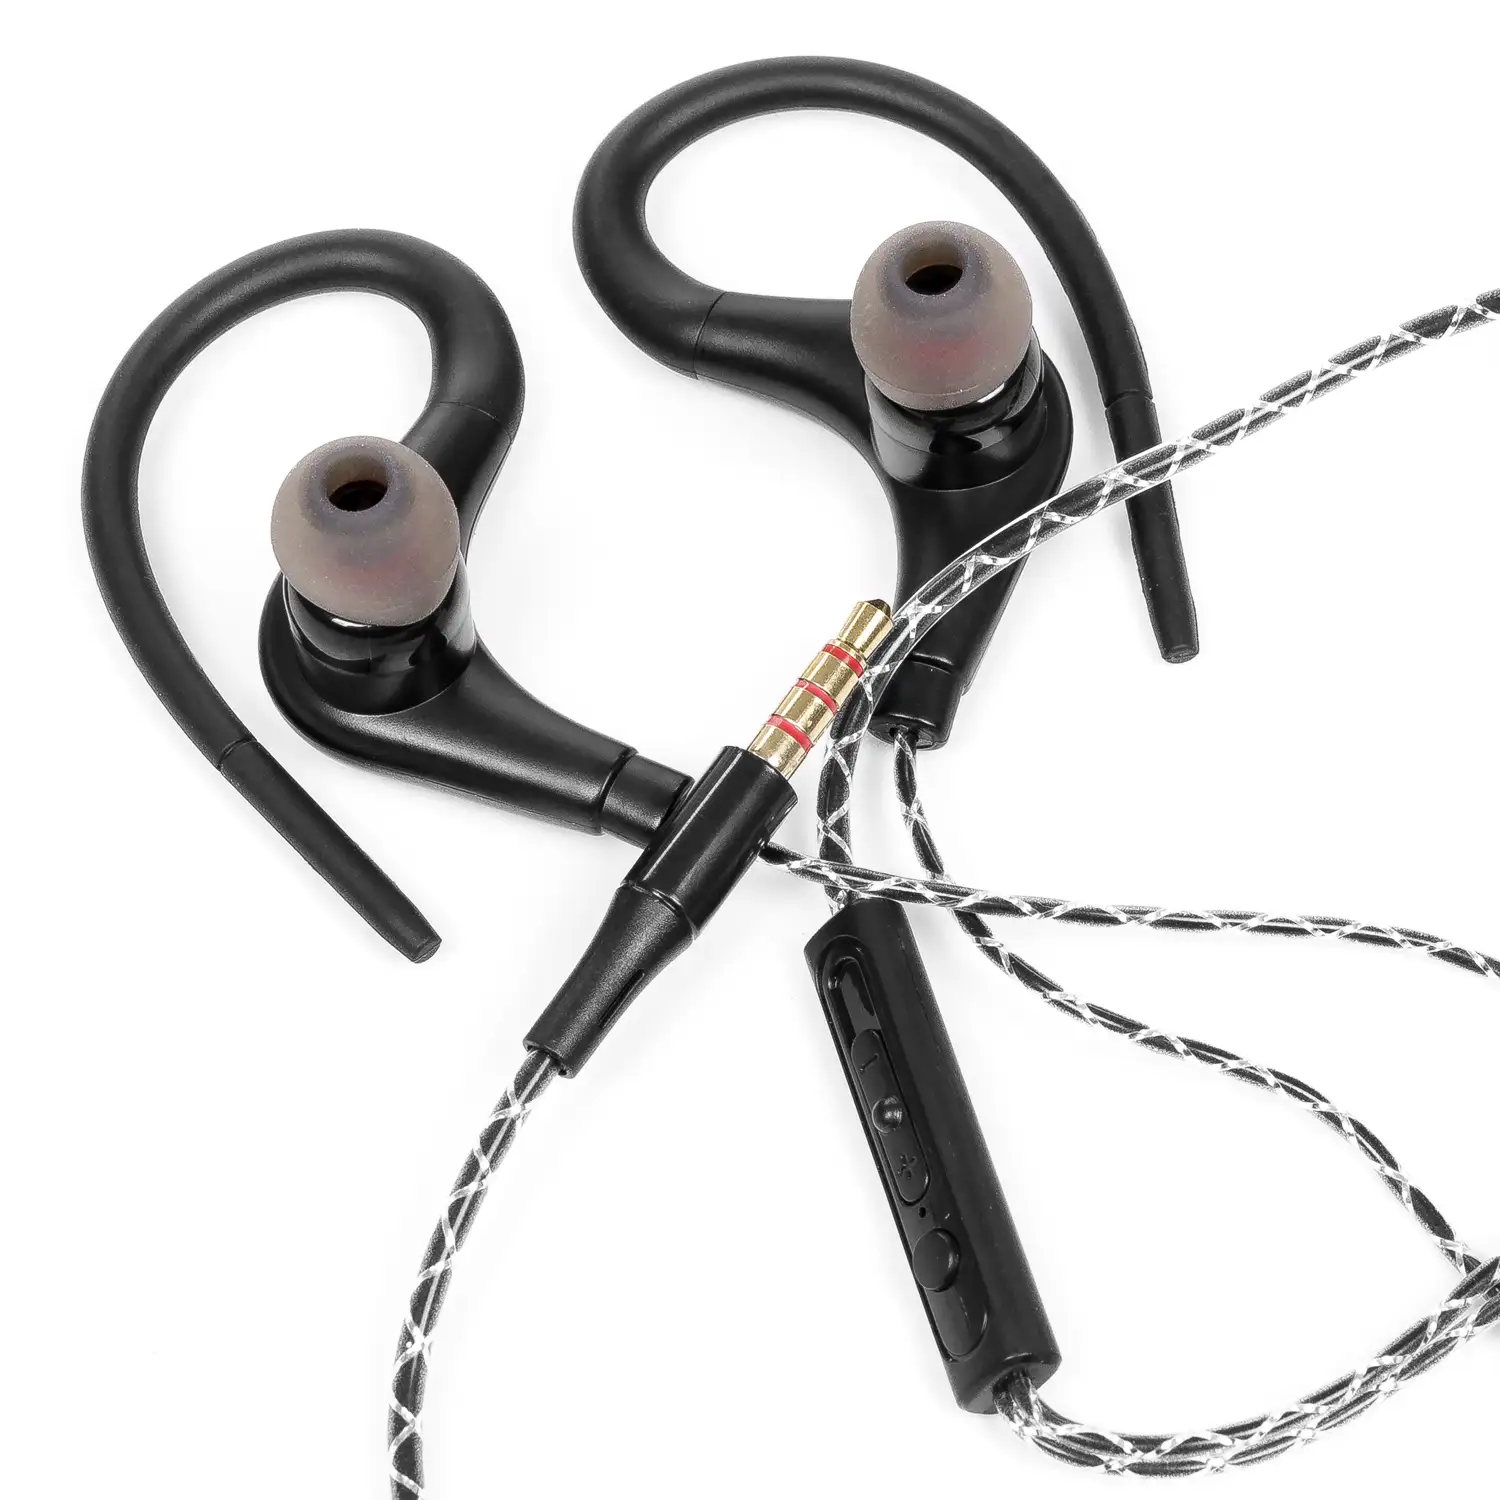 Auriculares deportivos con cable, cascos con micrófono pequeño de